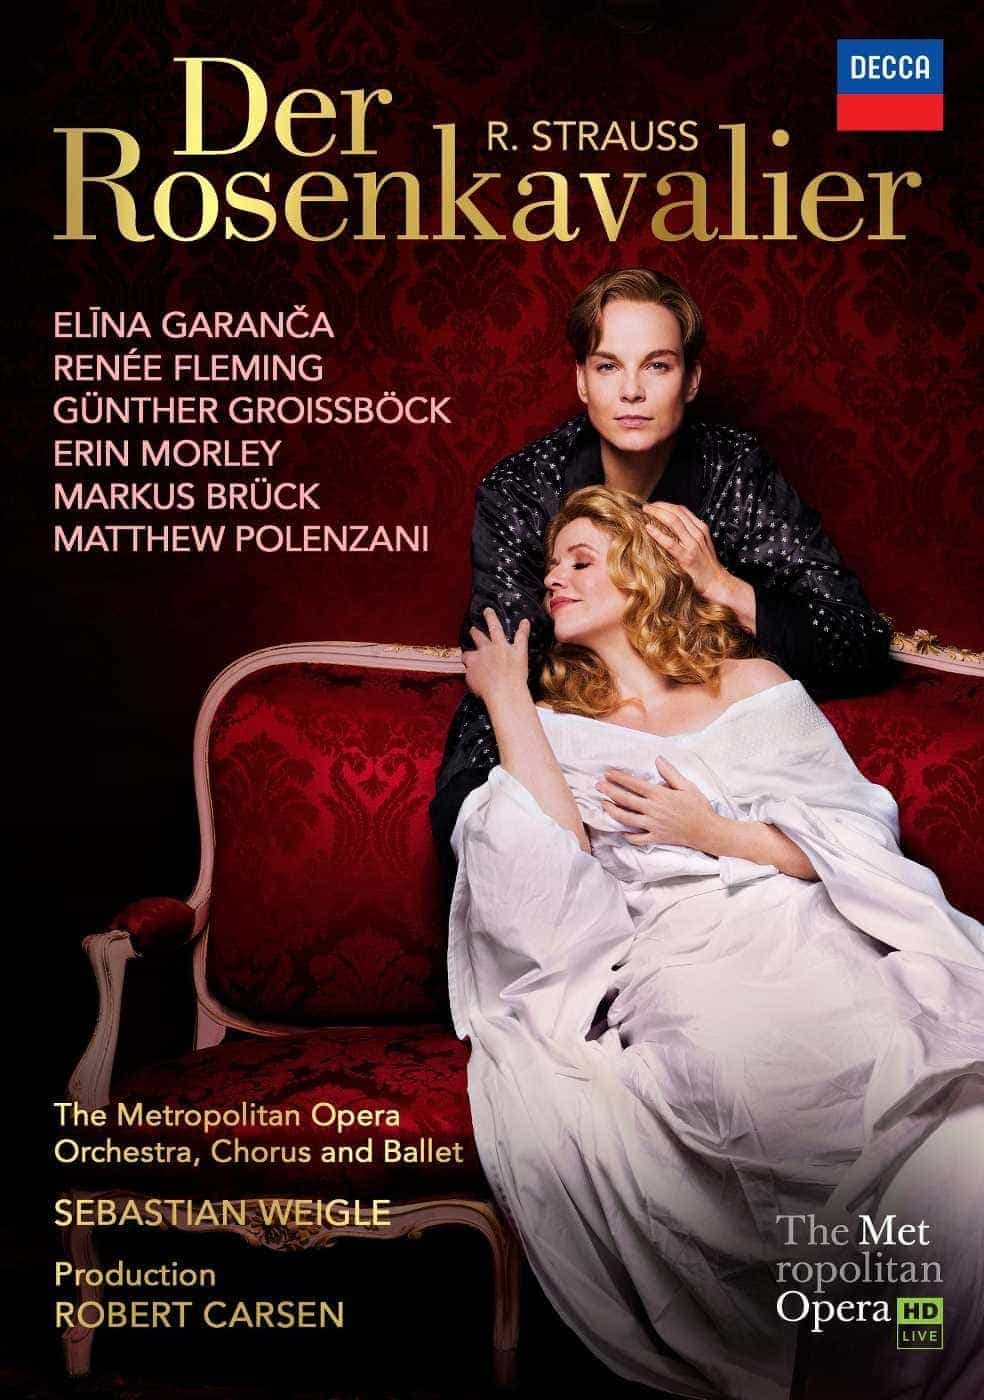 Der Rosenkavalier: Met Opera 2017